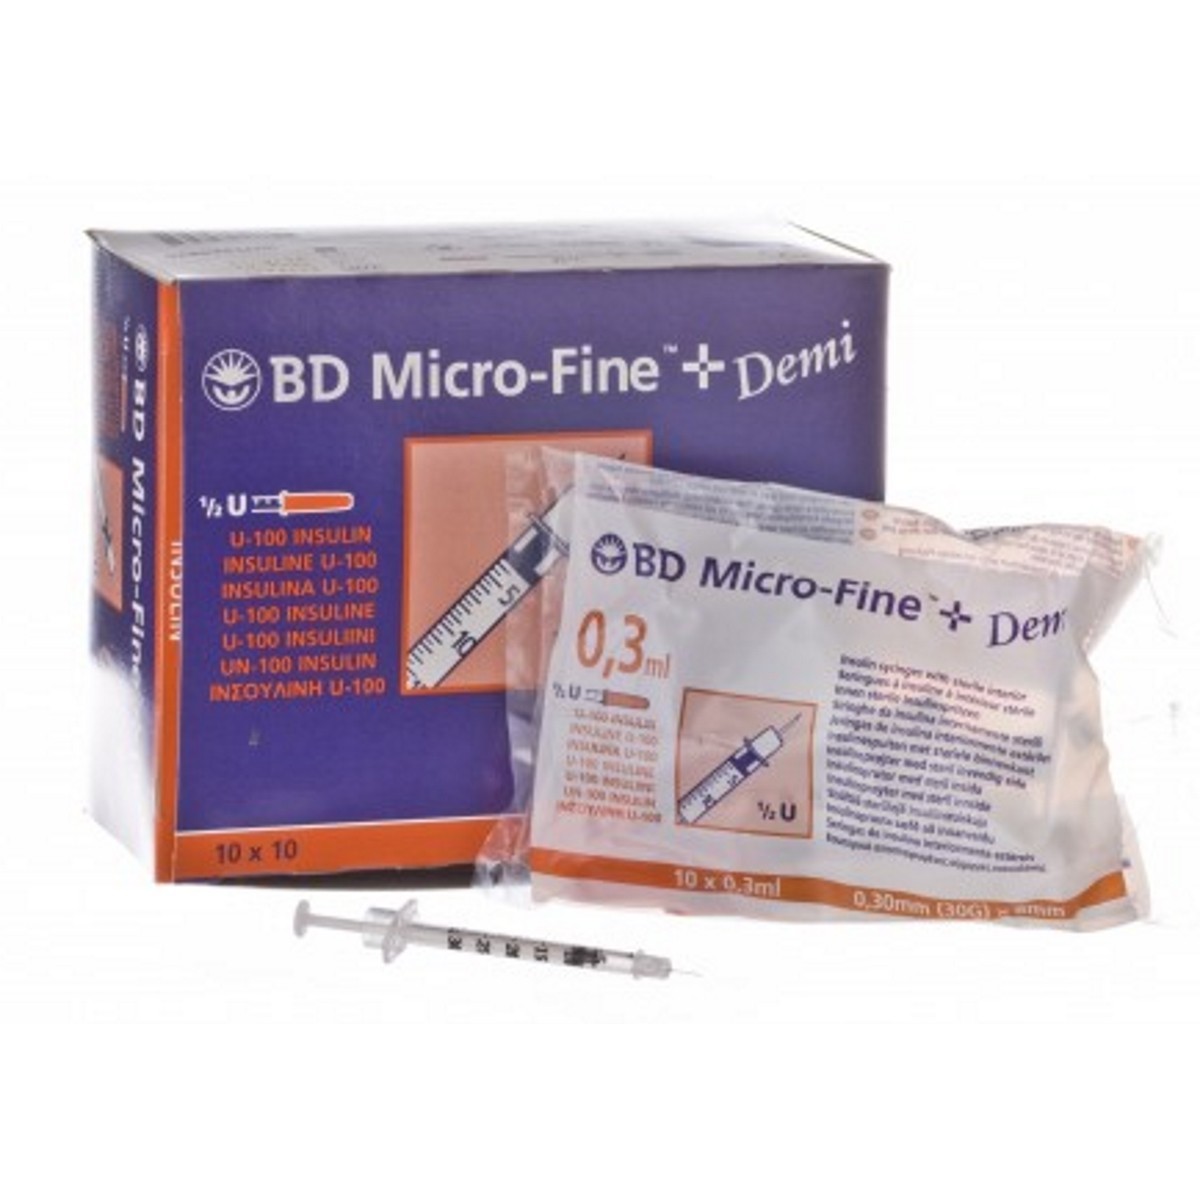 Microfine Demi 0 3ml U100 Insulin Syringes Box Of 100 From 17 99